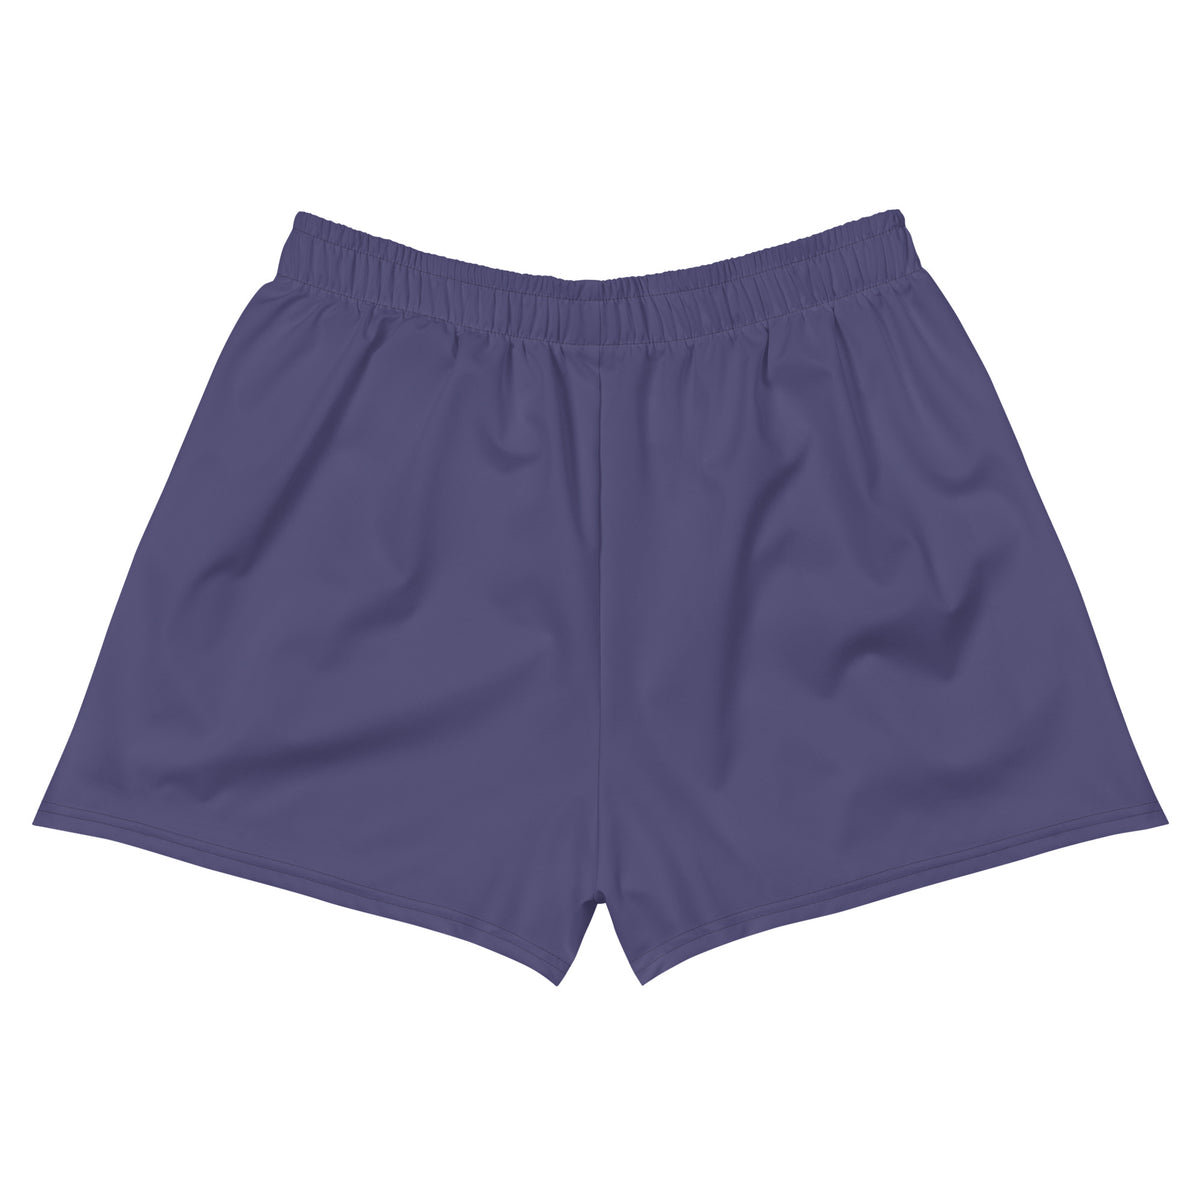 Lavender mm Athletic Shorts